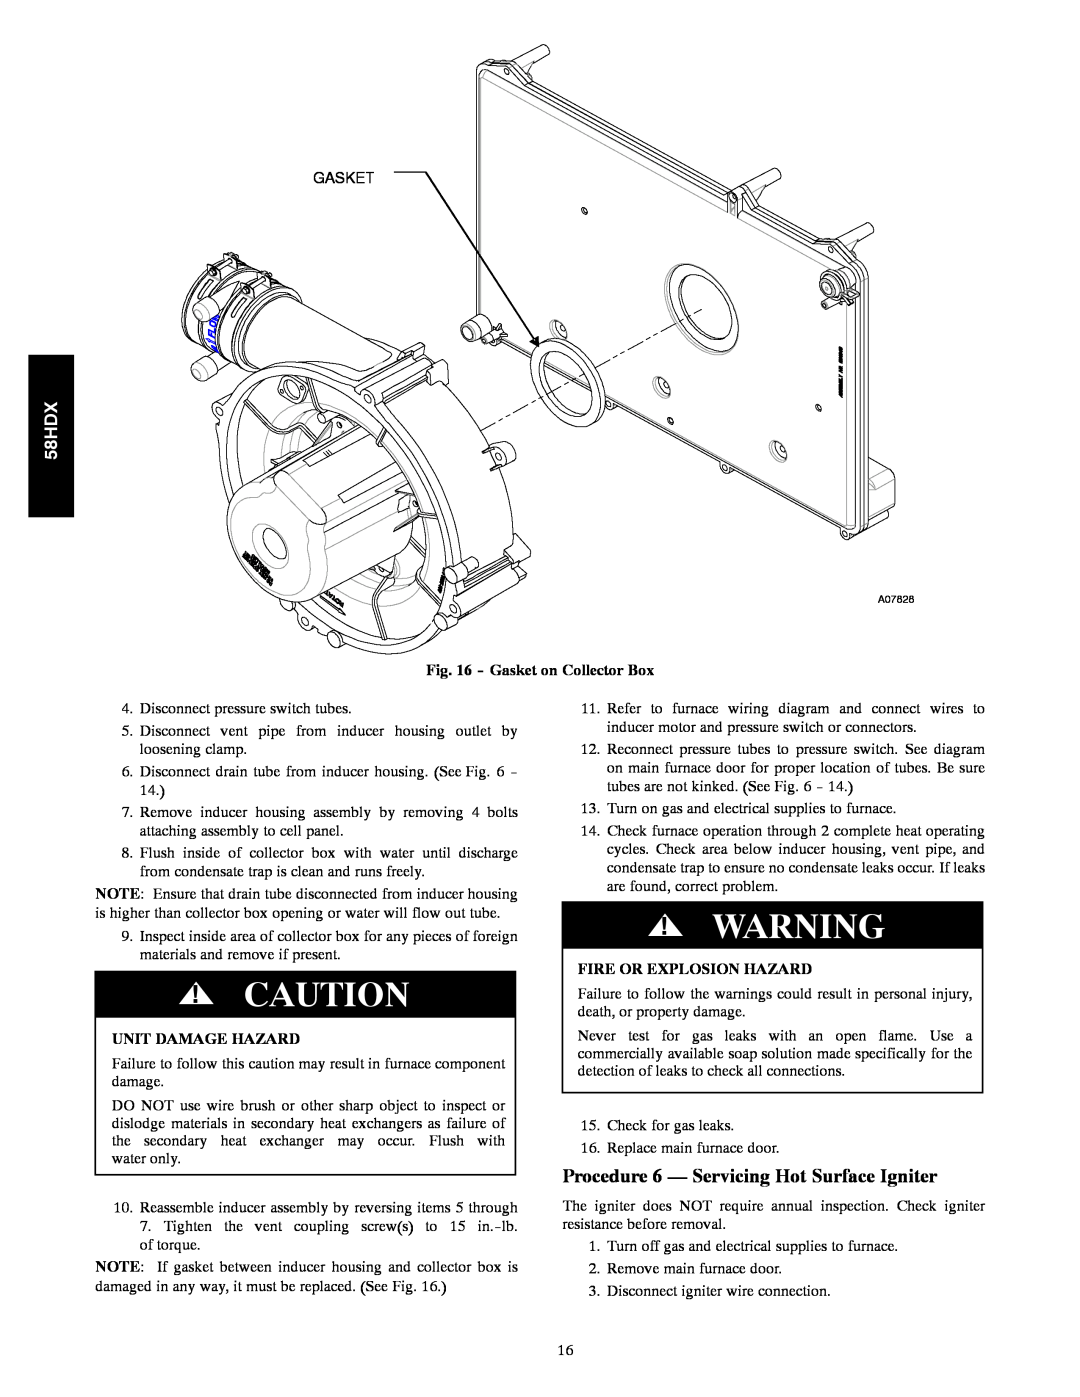 Carrier 58HDX instruction manual Procedure 6 - Servicing Hot Surface Igniter, Gasket on Collector Box, Unit Damage Hazard 